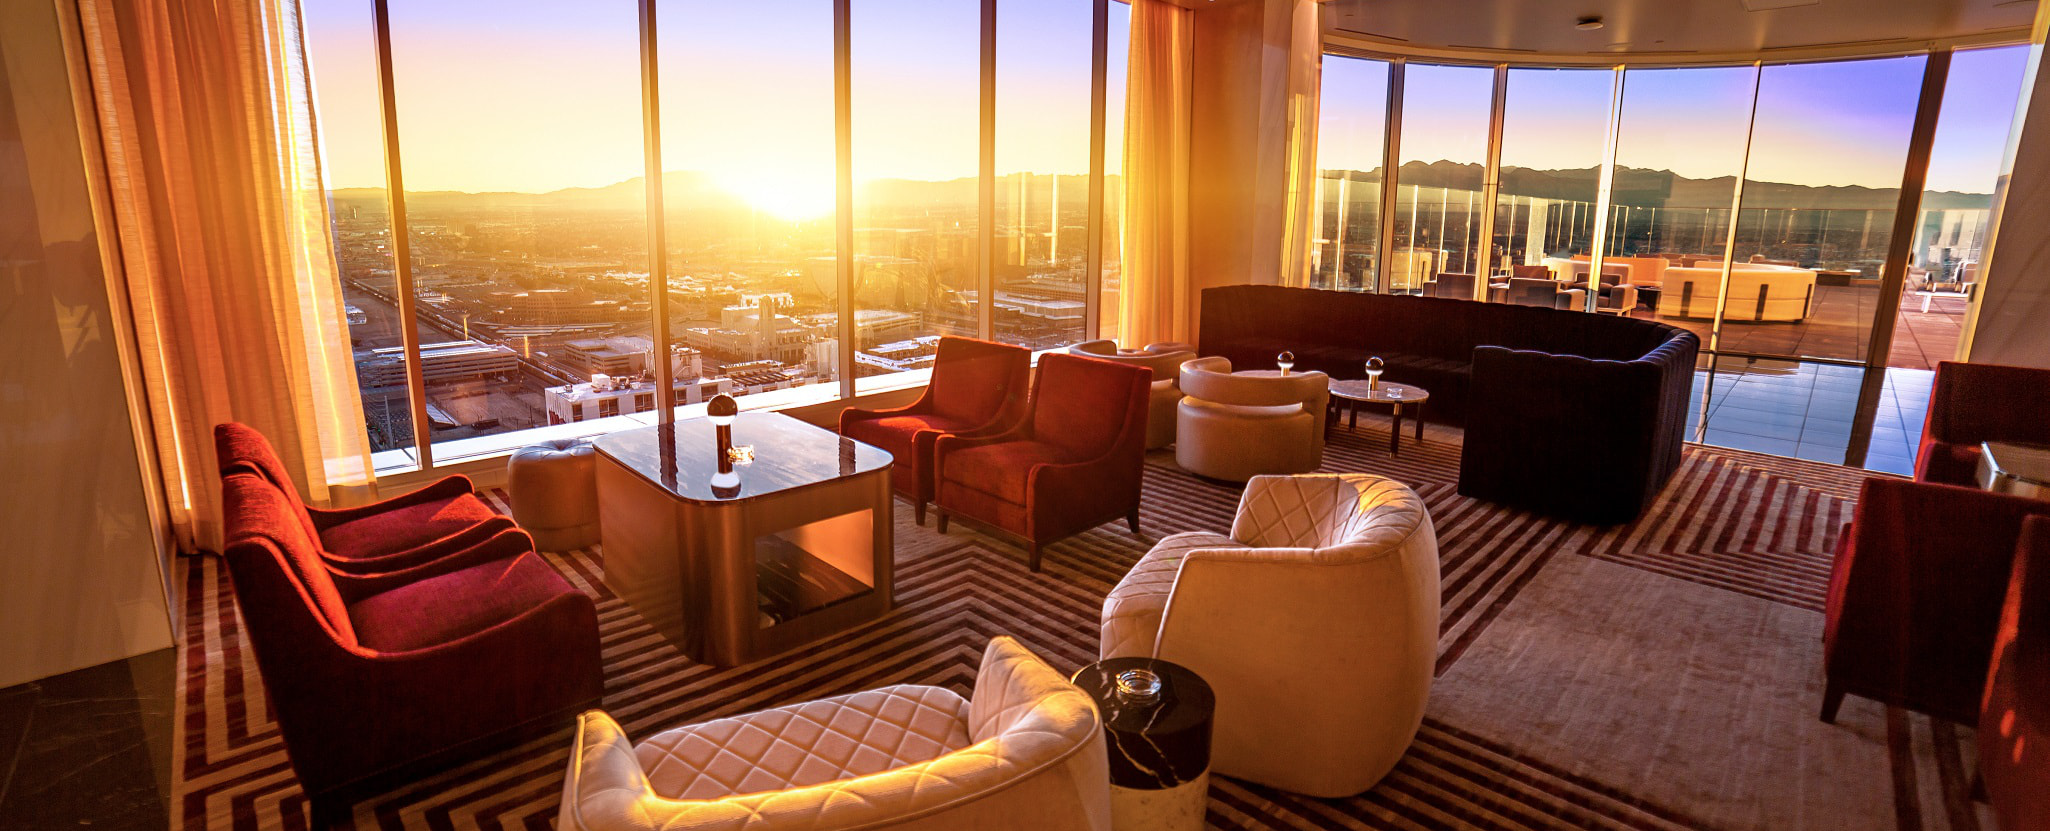 $22 Casino Hotels in Las Vegas, NV: Find Casino Resorts